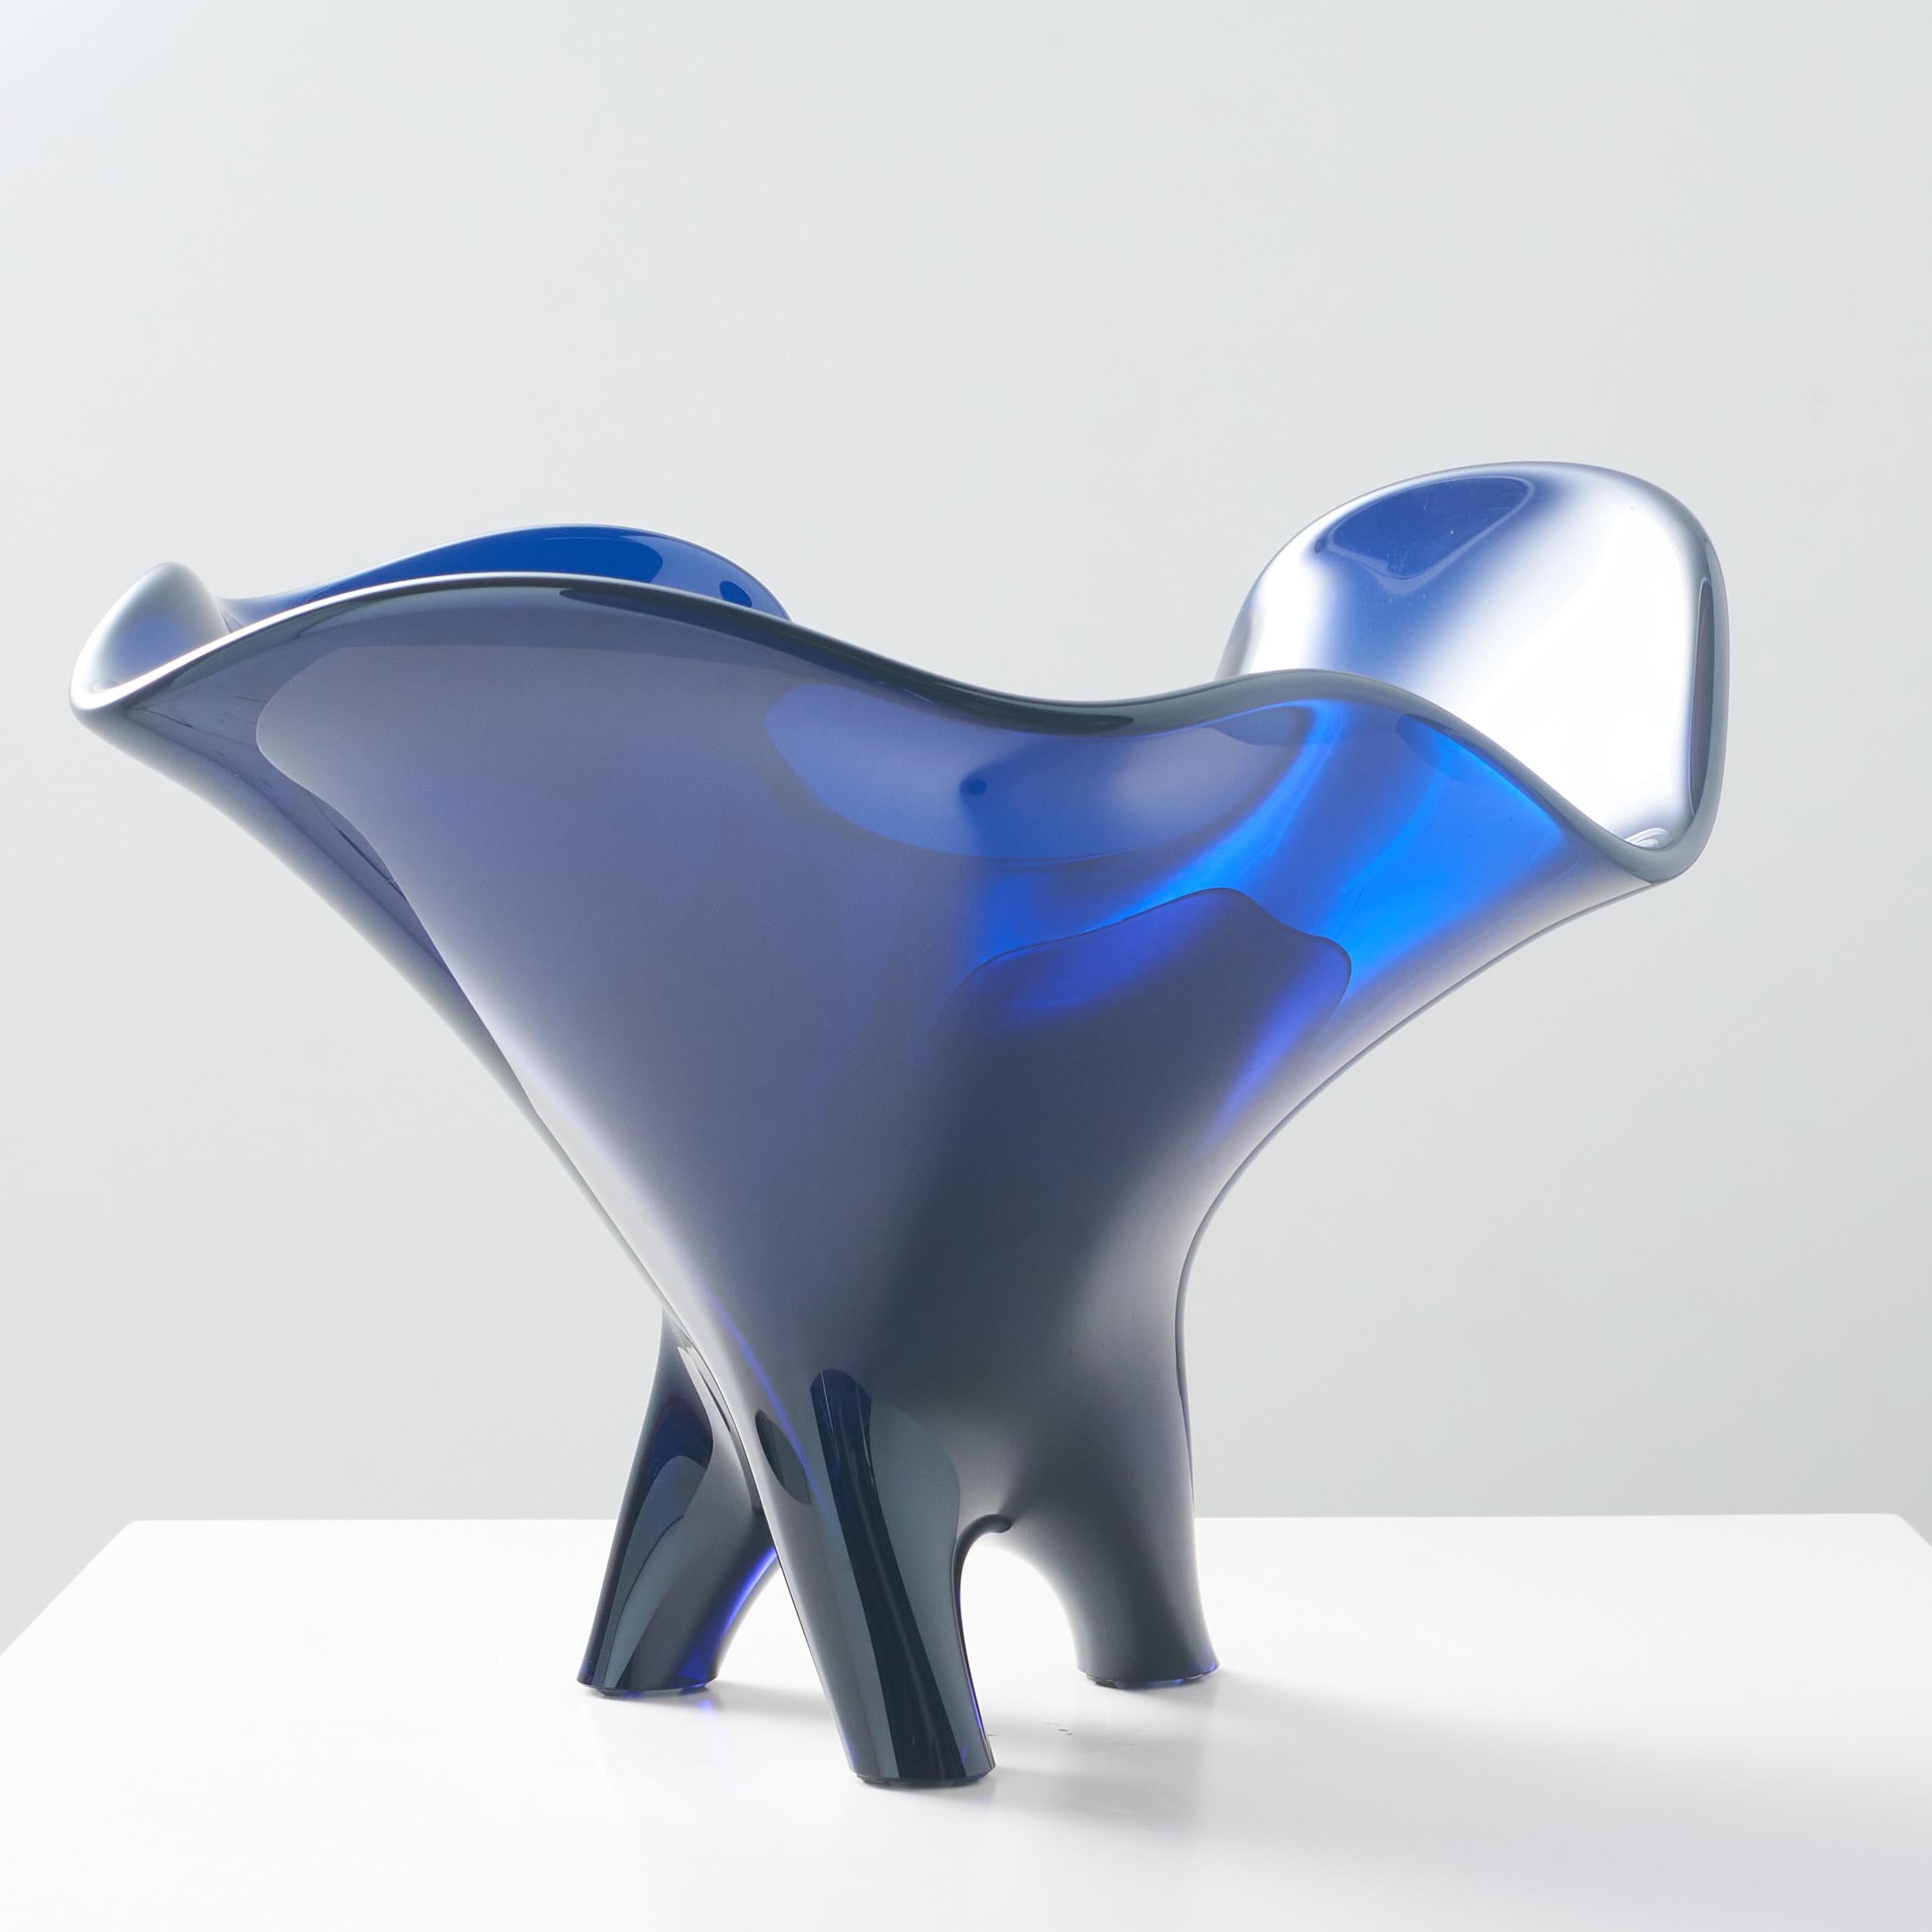 A unique Tornado blue glass bowl with three feet by Allan Scharff for Holmegaard Glass.
